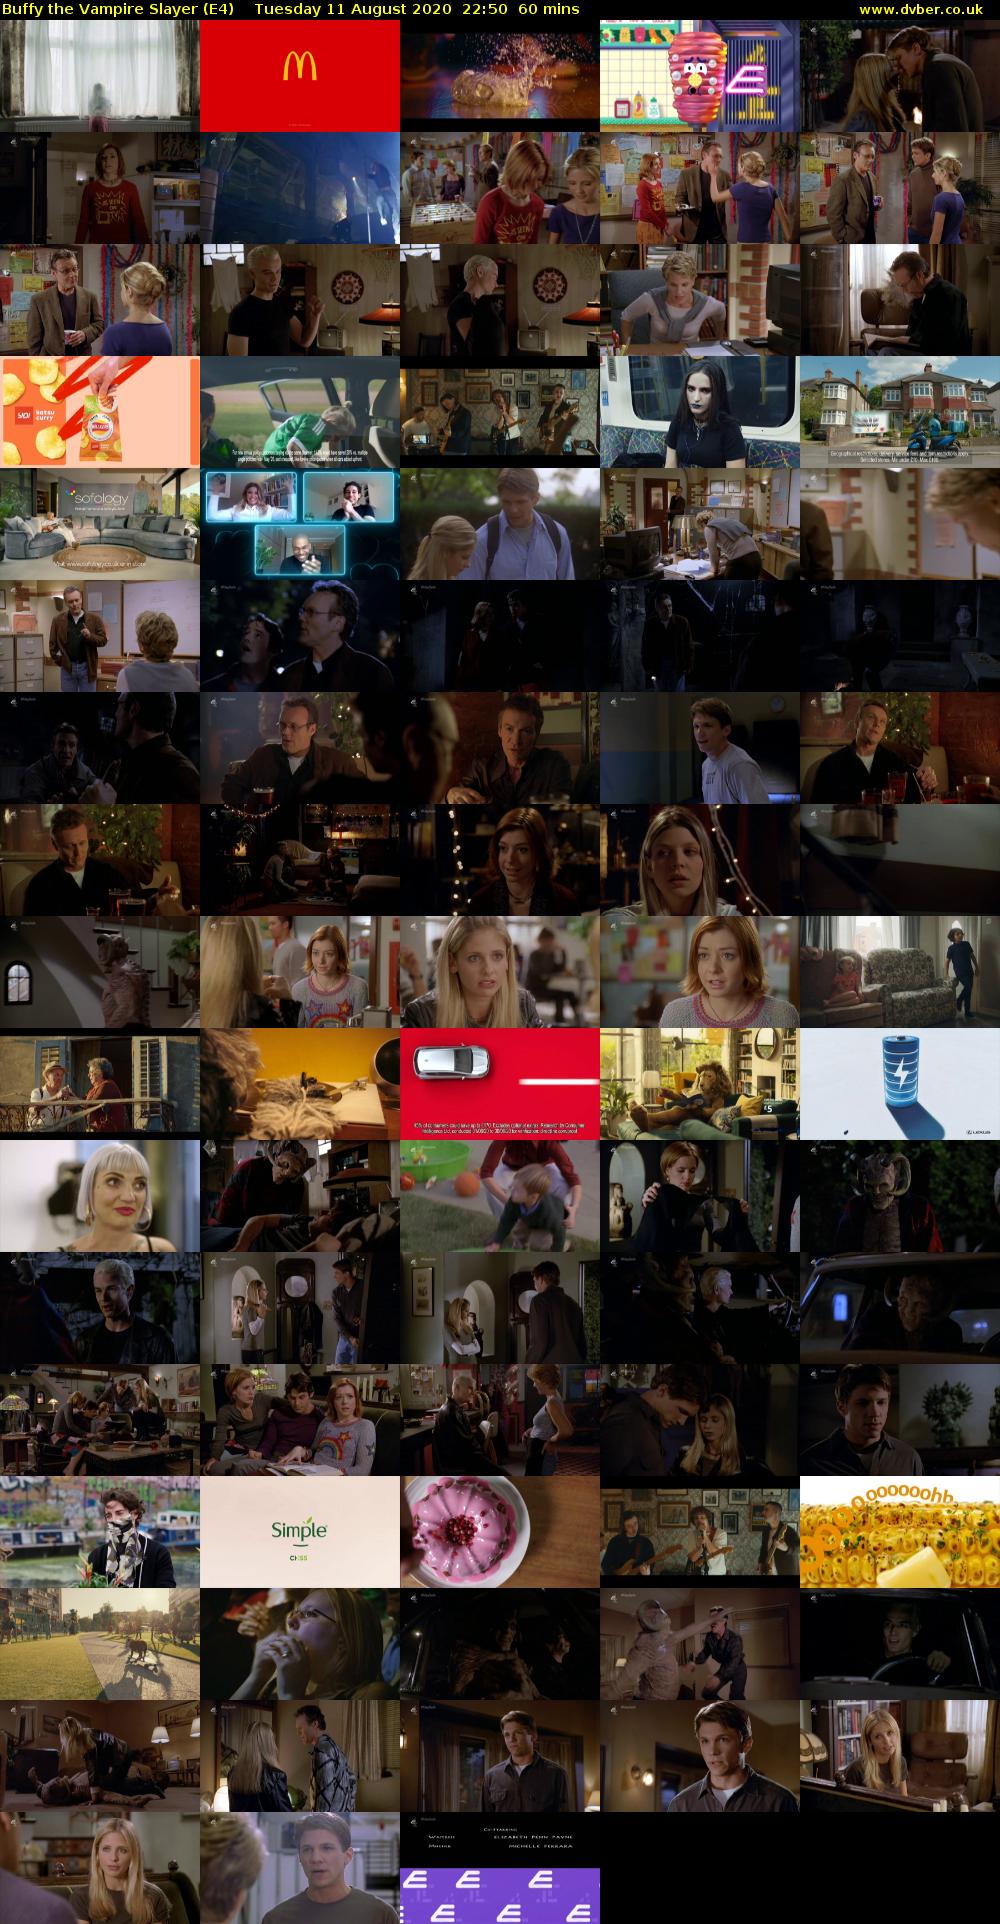 Buffy the Vampire Slayer (E4) Tuesday 11 August 2020 22:50 - 23:50